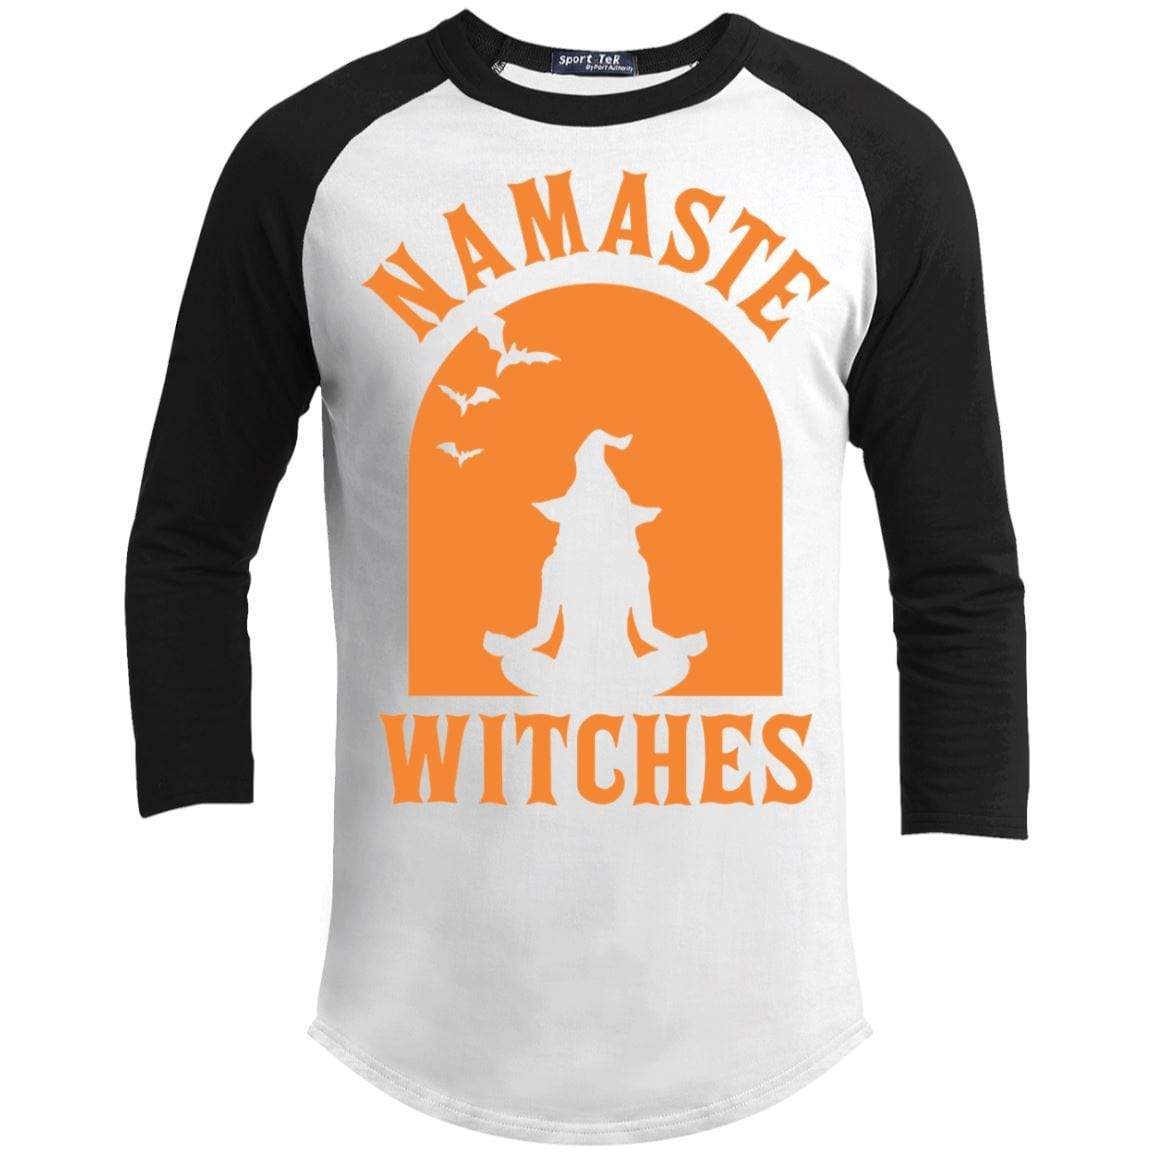 Namaste Witches Raglan T-Shirts CustomCat White/Black X-Small 